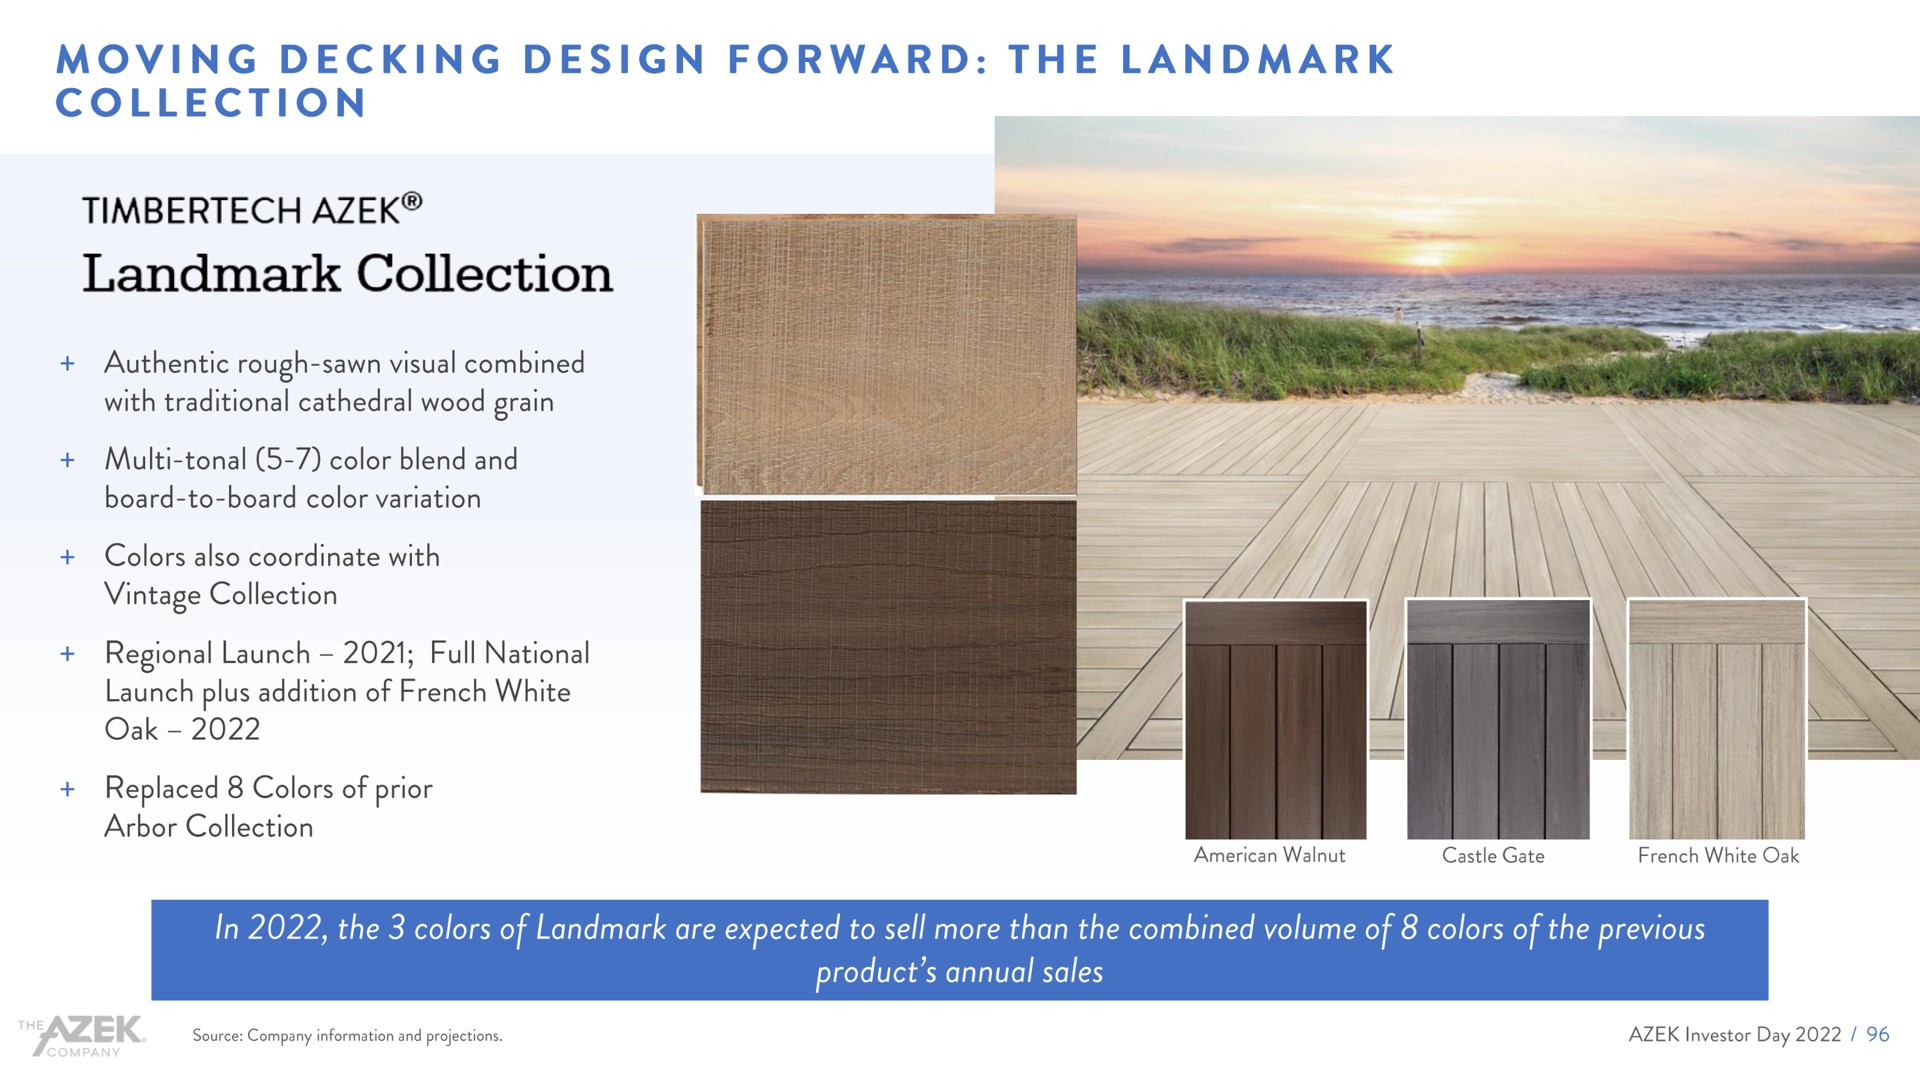 moving decking design forward the collection landmark landmark collection | Azek